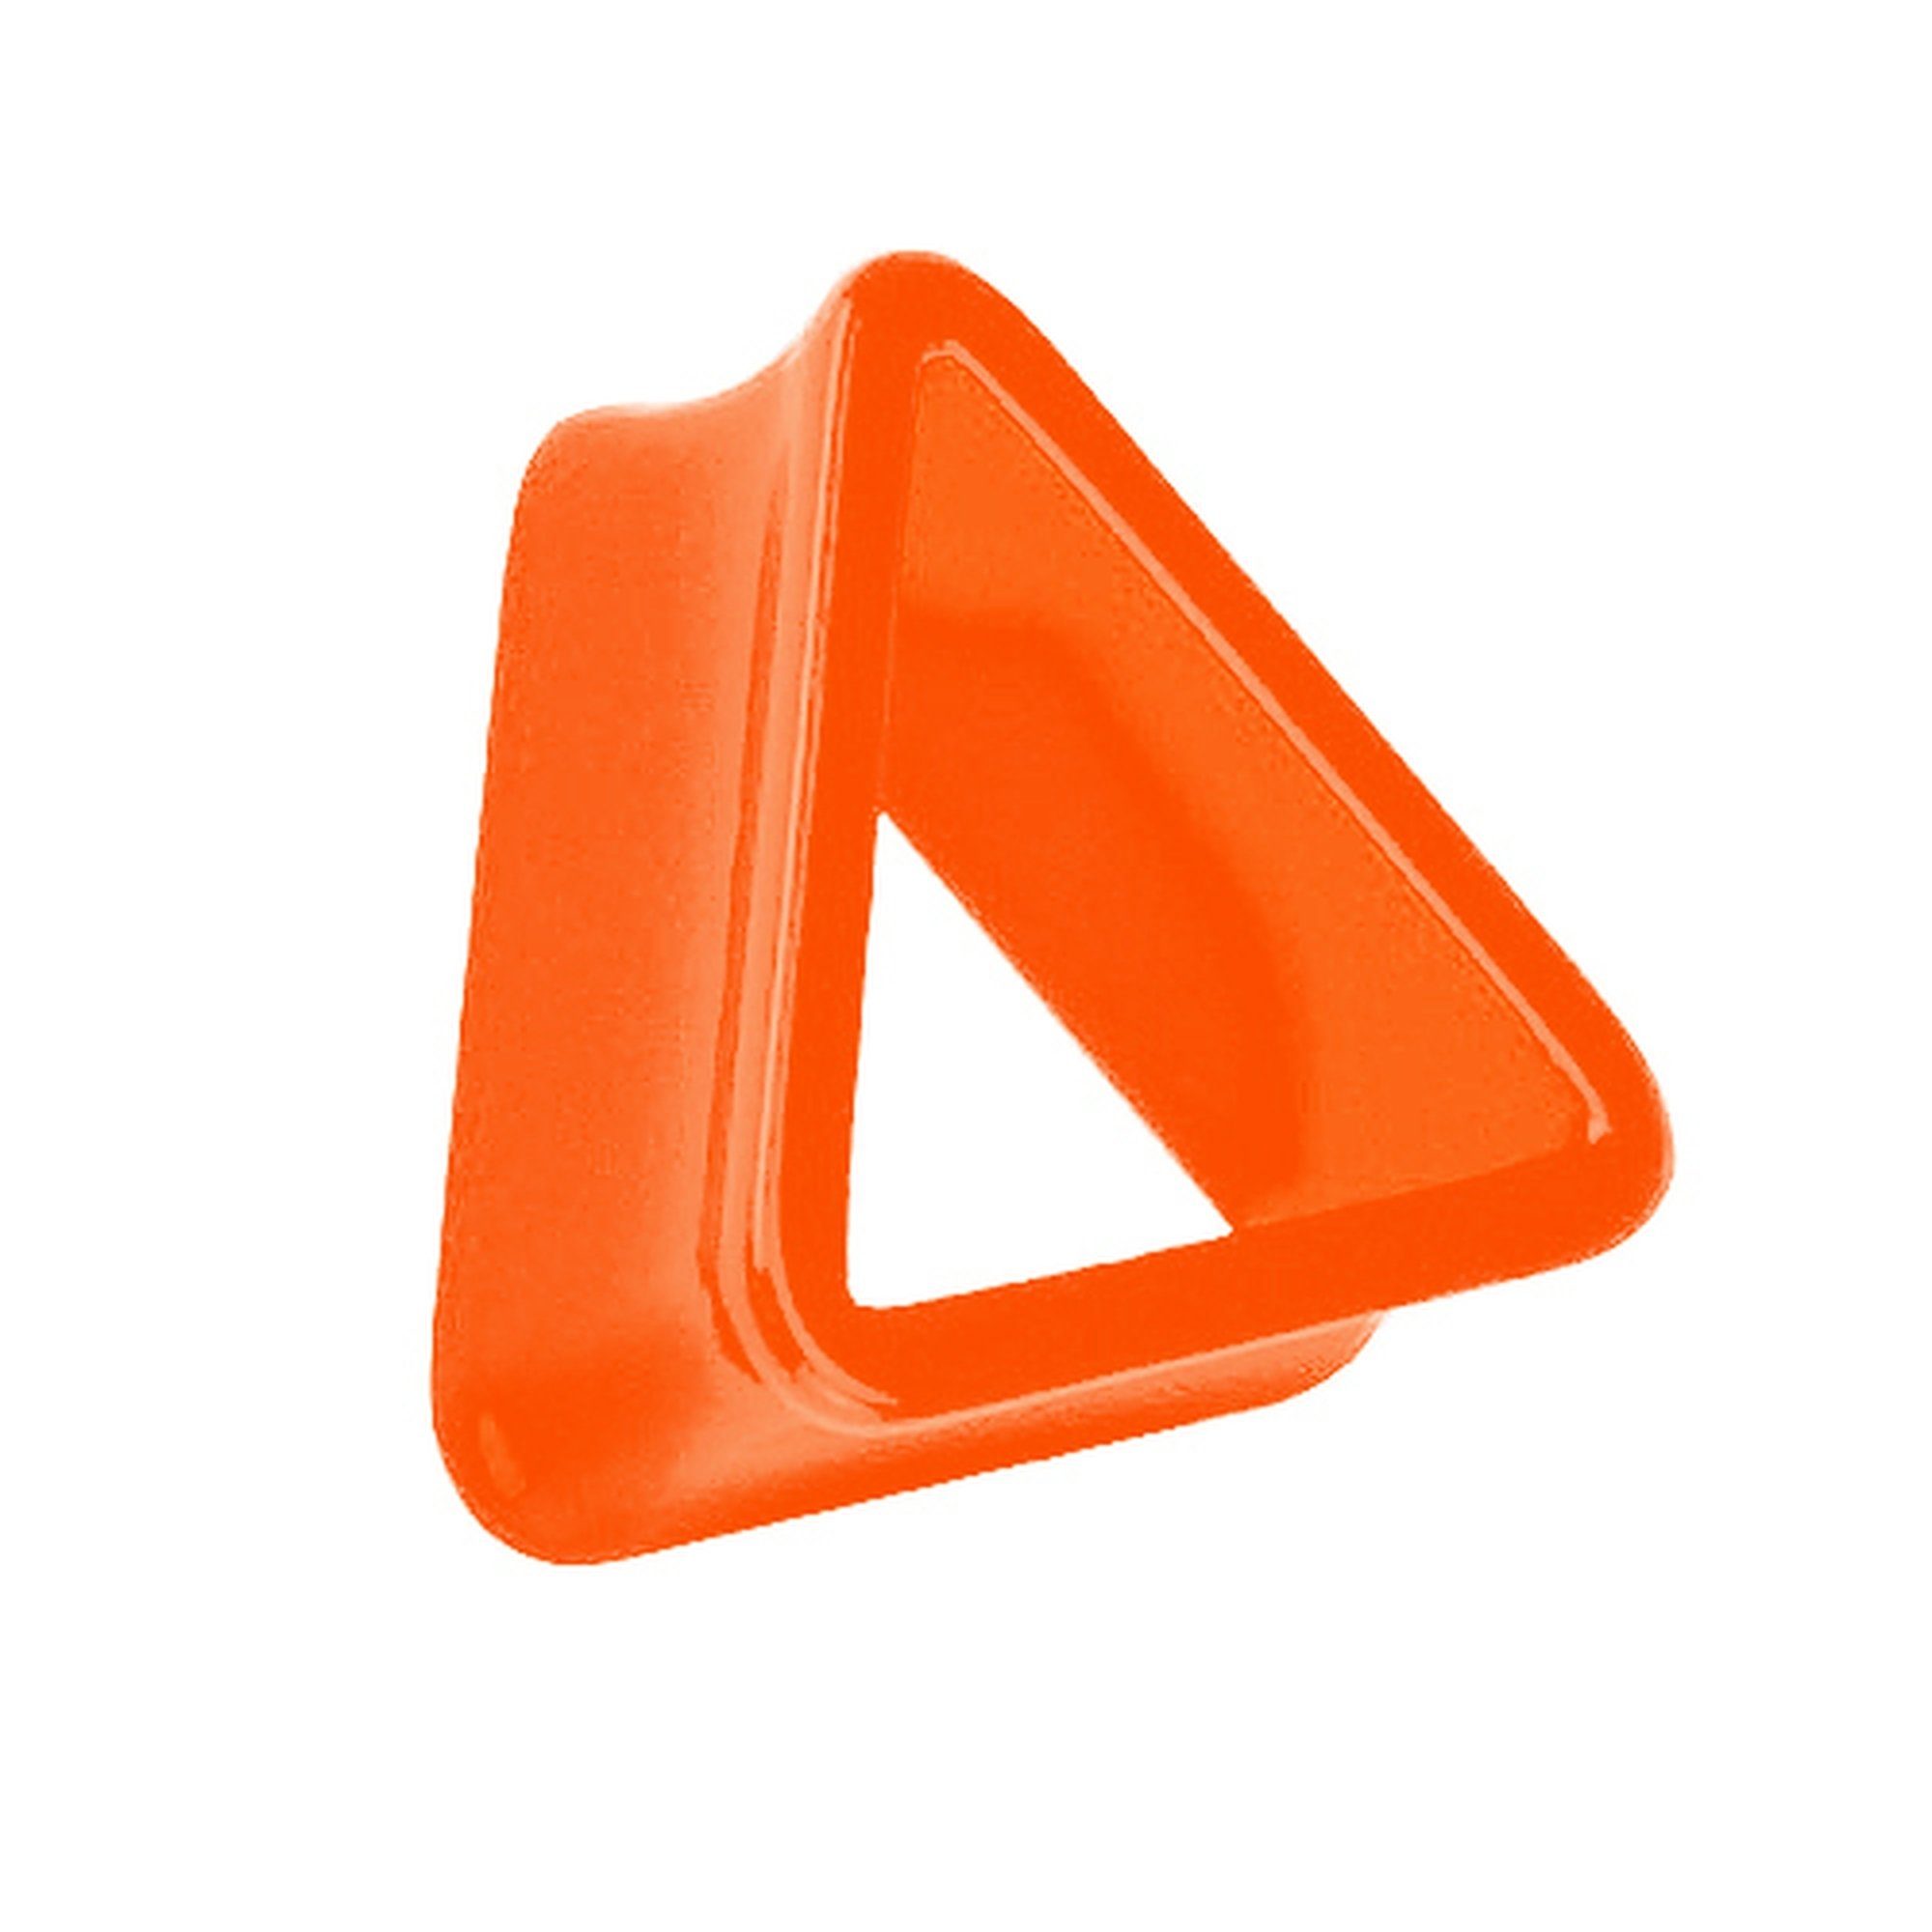 Taffstyle Plug Piercing Kunststoff Dreieck Double Flared, Flesh Tunnel Ohr Plug Ohrpiercing Kunststoff Dreieck Double Flared Orange